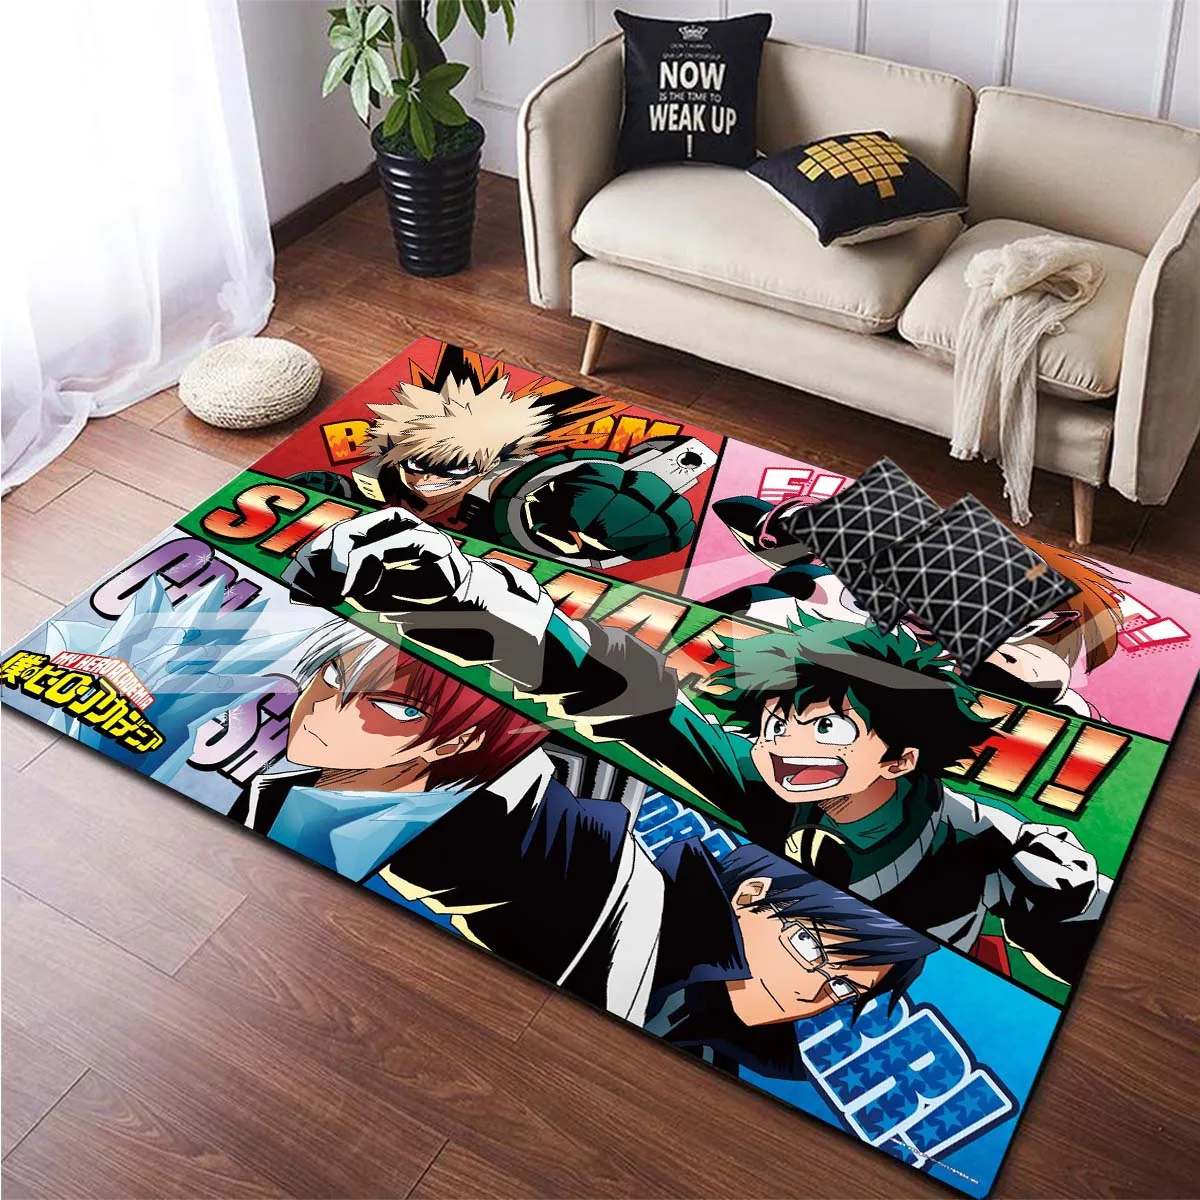 Japanese Anime Cartoon My Hero Academia Large Area Rug for Living Room Bedroom Dorm Floor Mats Doormats